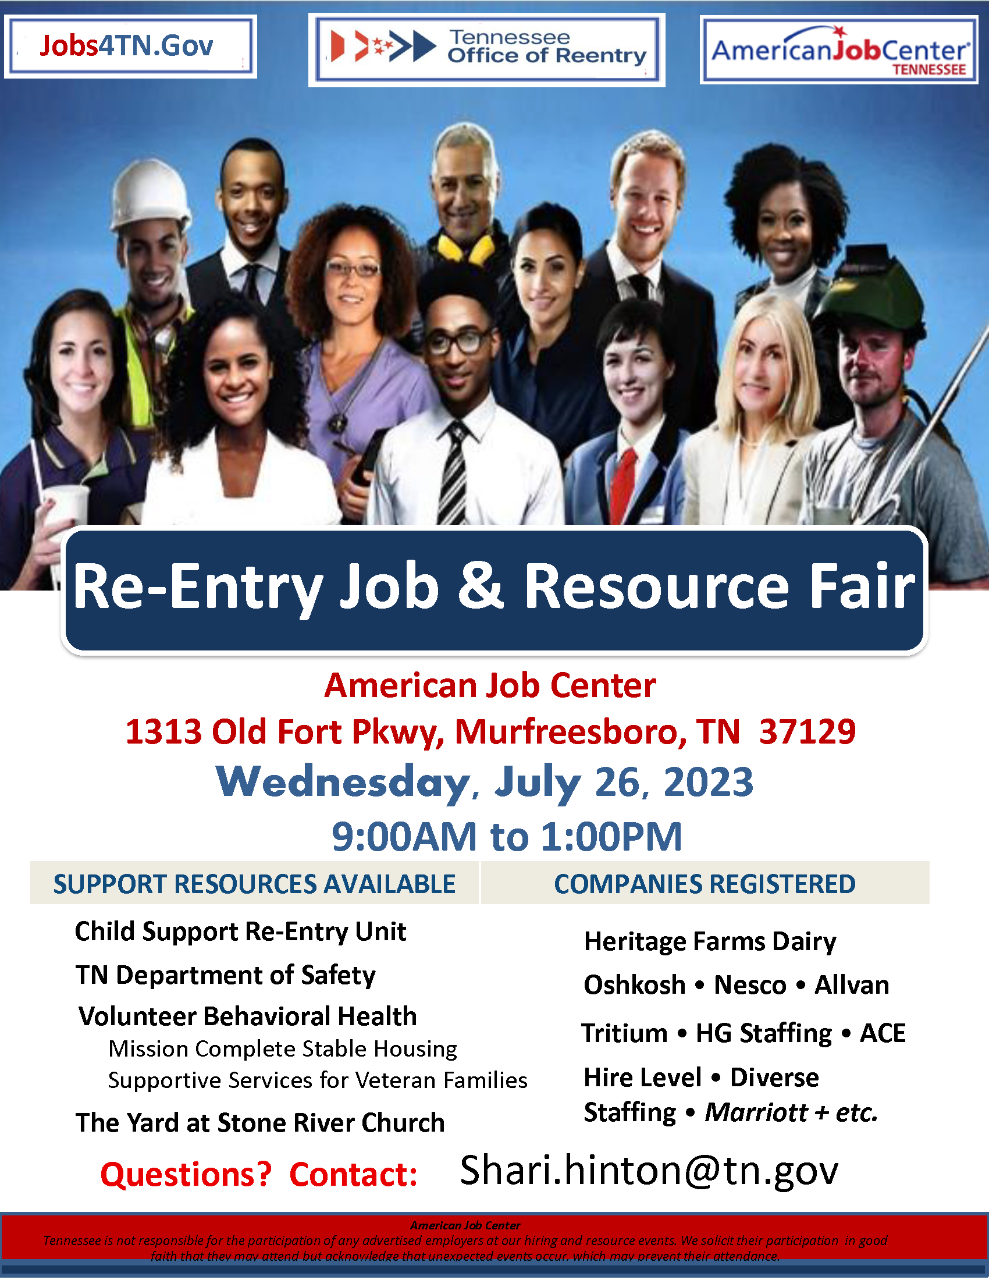 Reentry Job & Resource Fair Murfreesboro AJC 7/26/2023